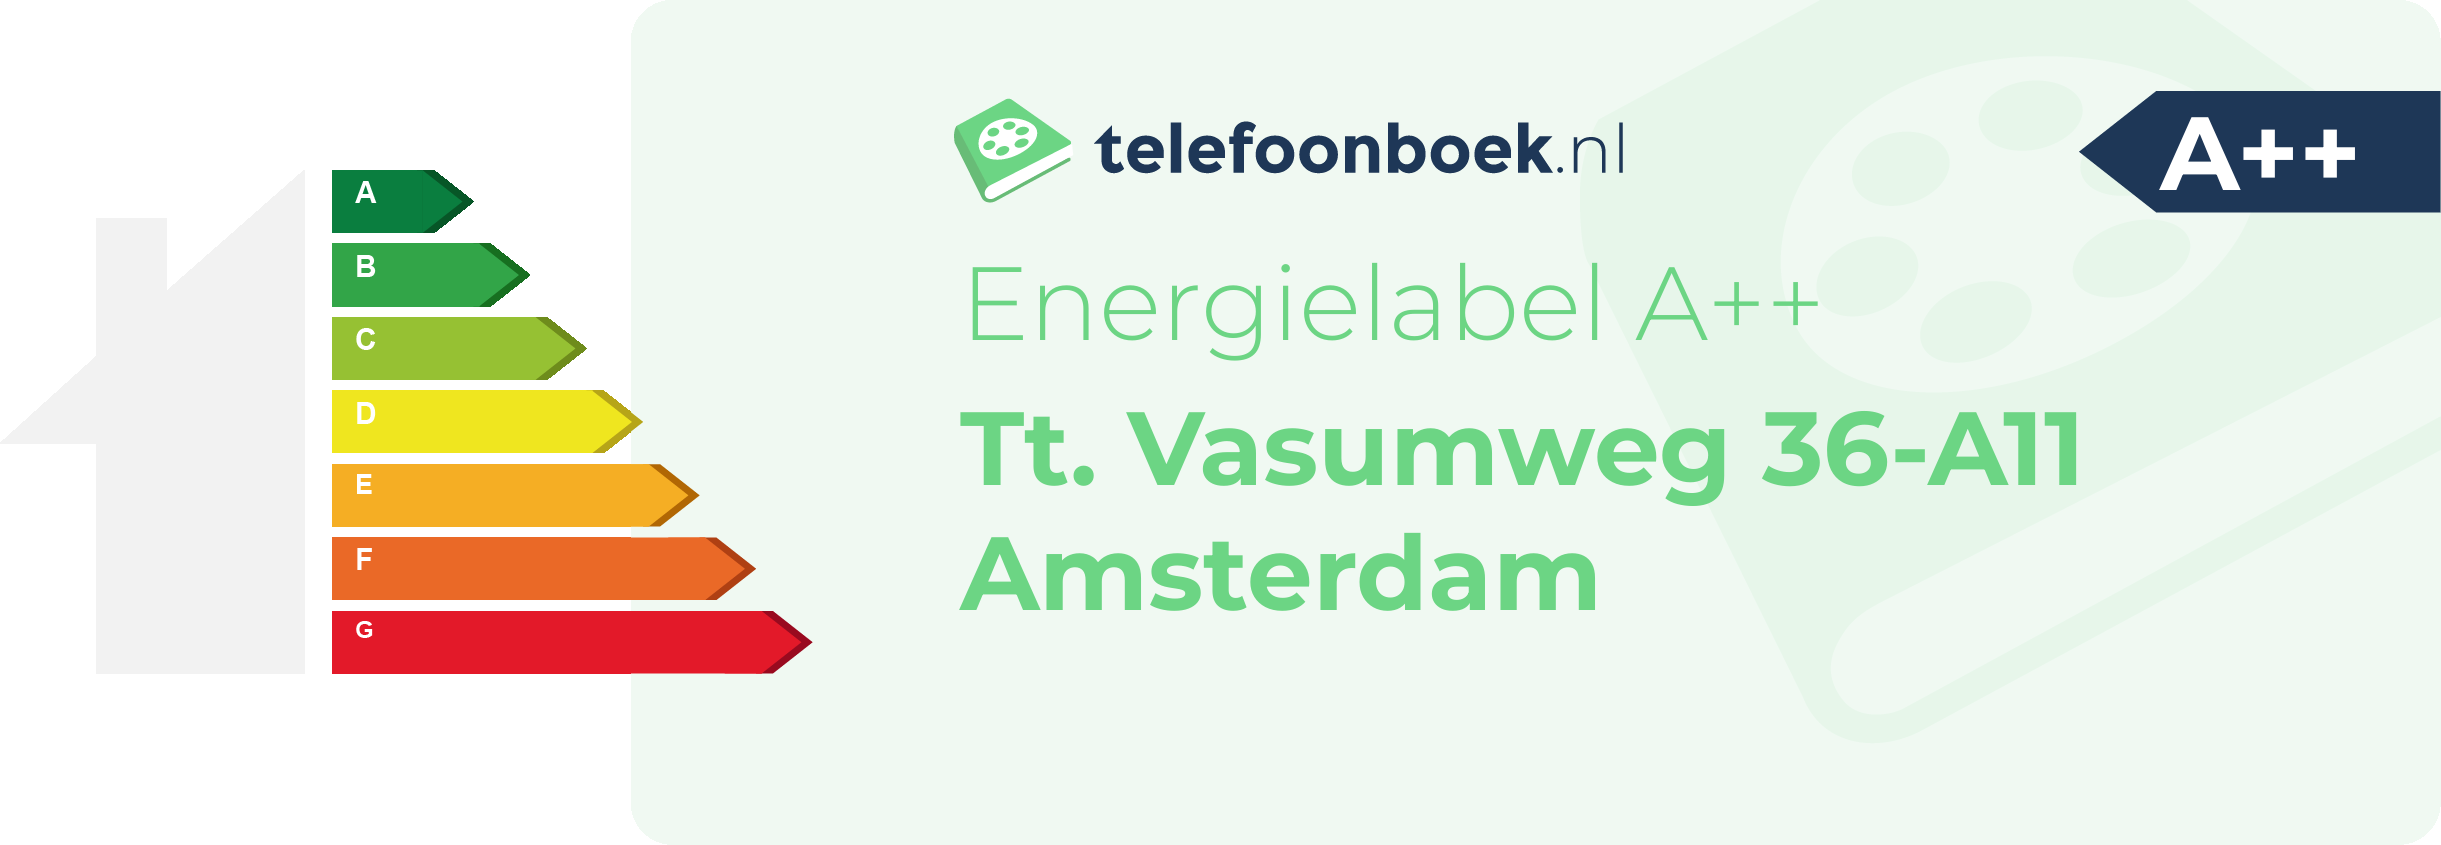 Energielabel Tt. Vasumweg 36-A11 Amsterdam